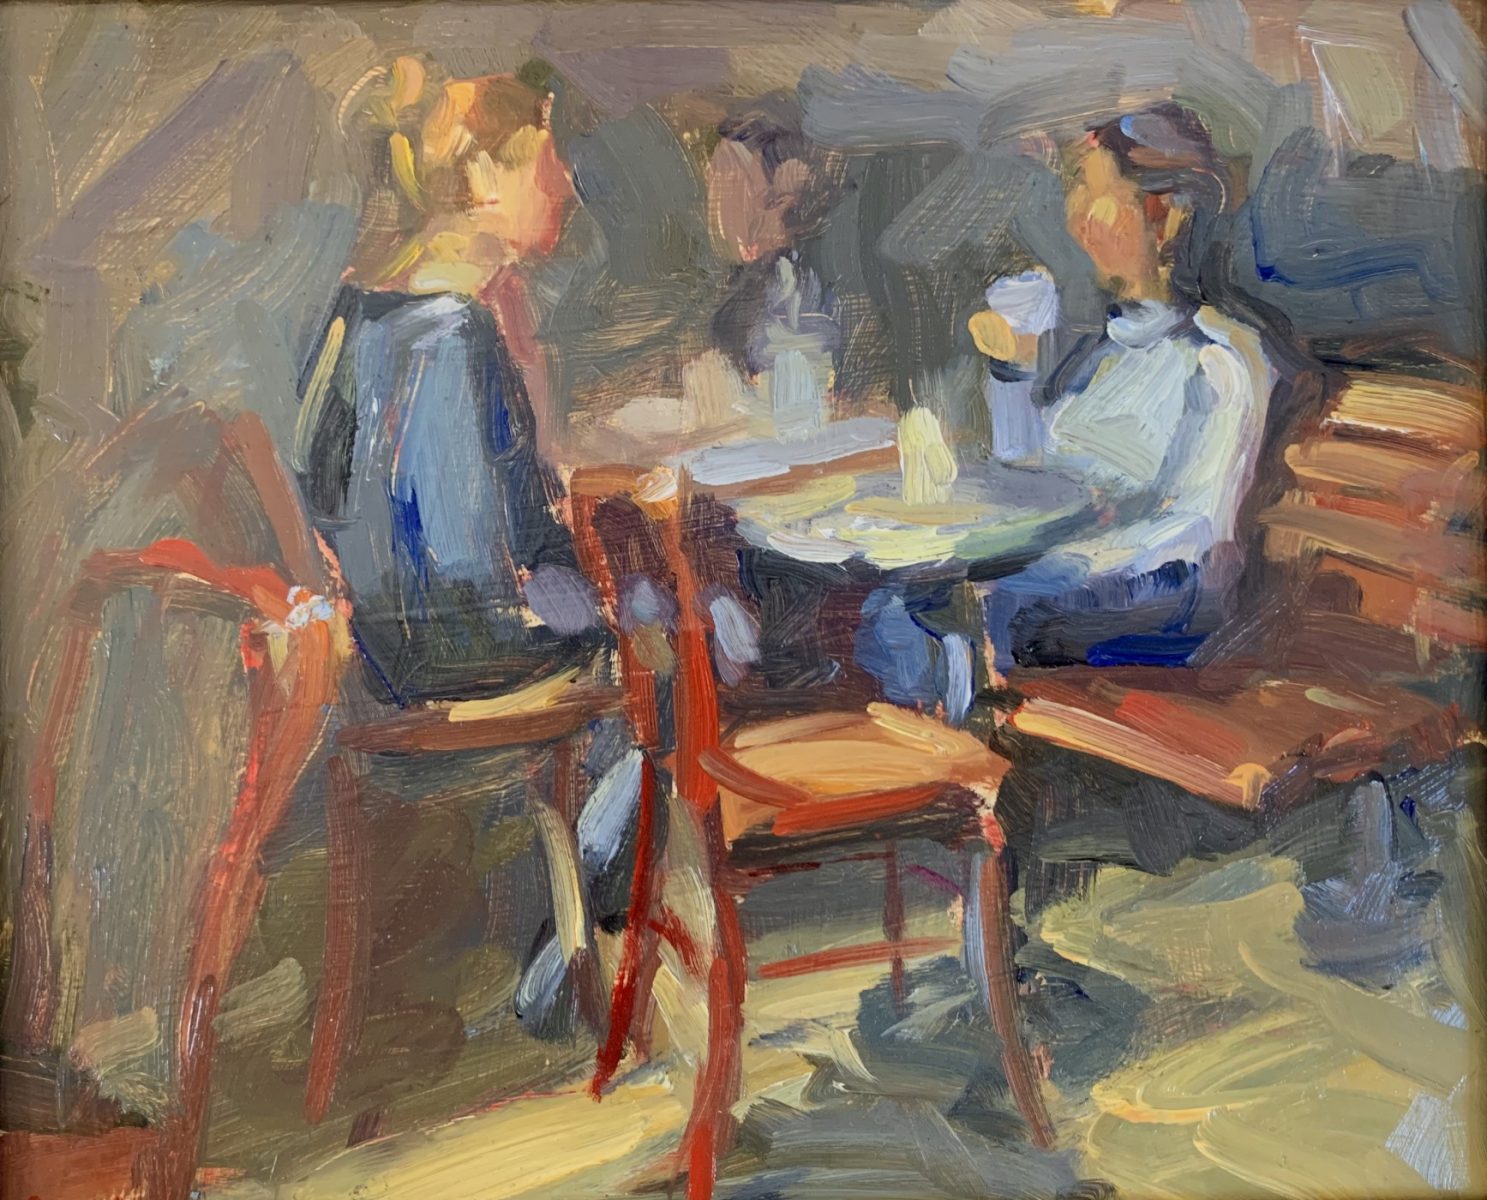 Oil painting of Restaurant scene by Lael Weyenberg